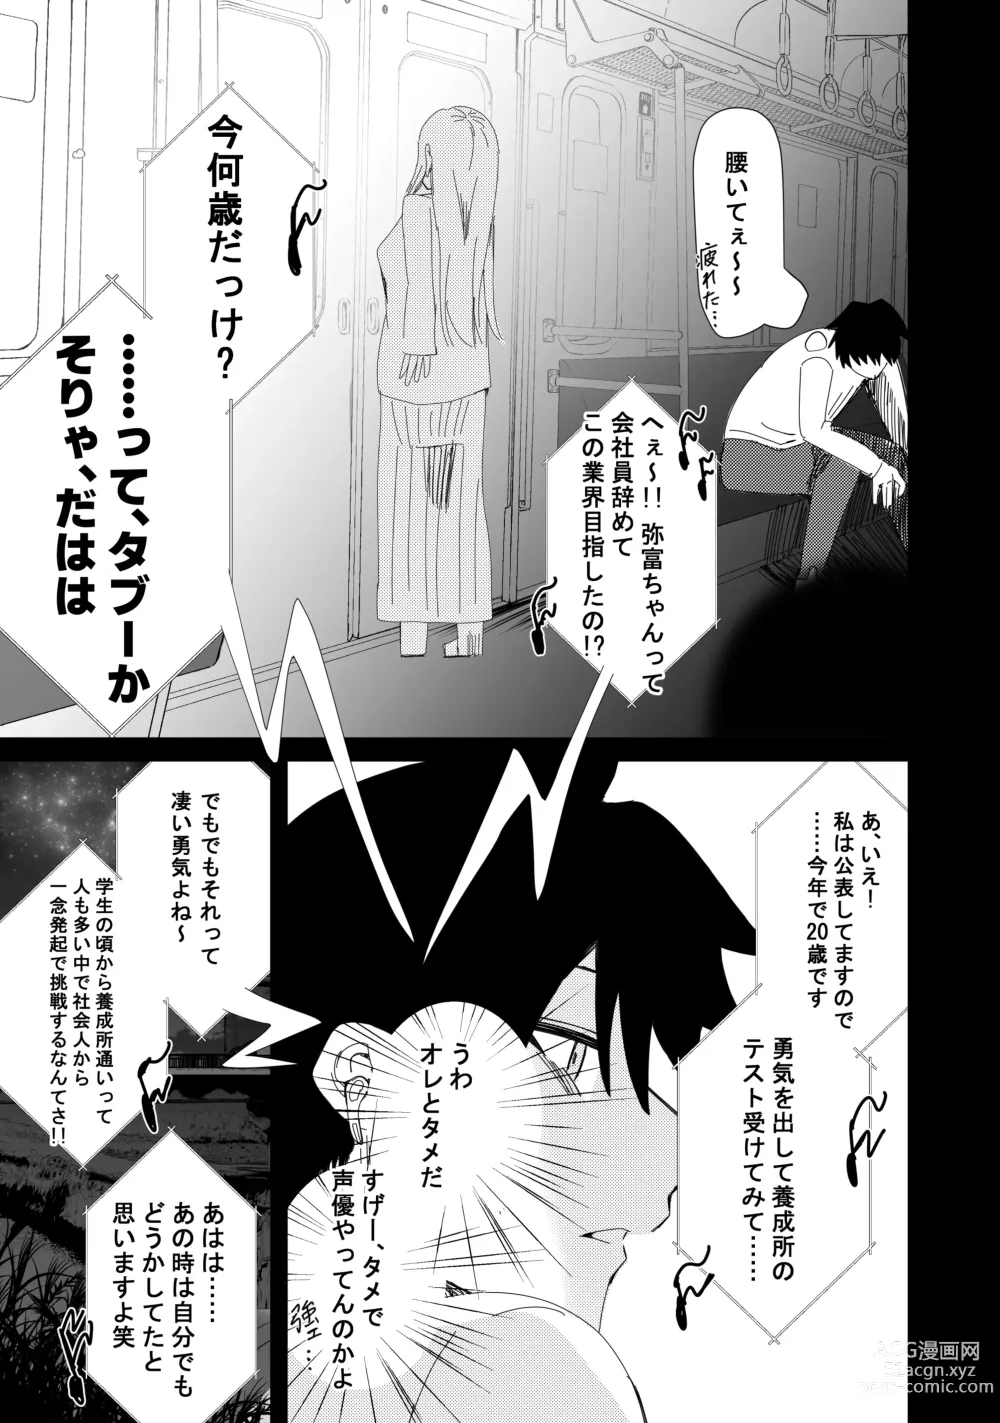 Page 9 of manga Junai Create Tokuten Manga